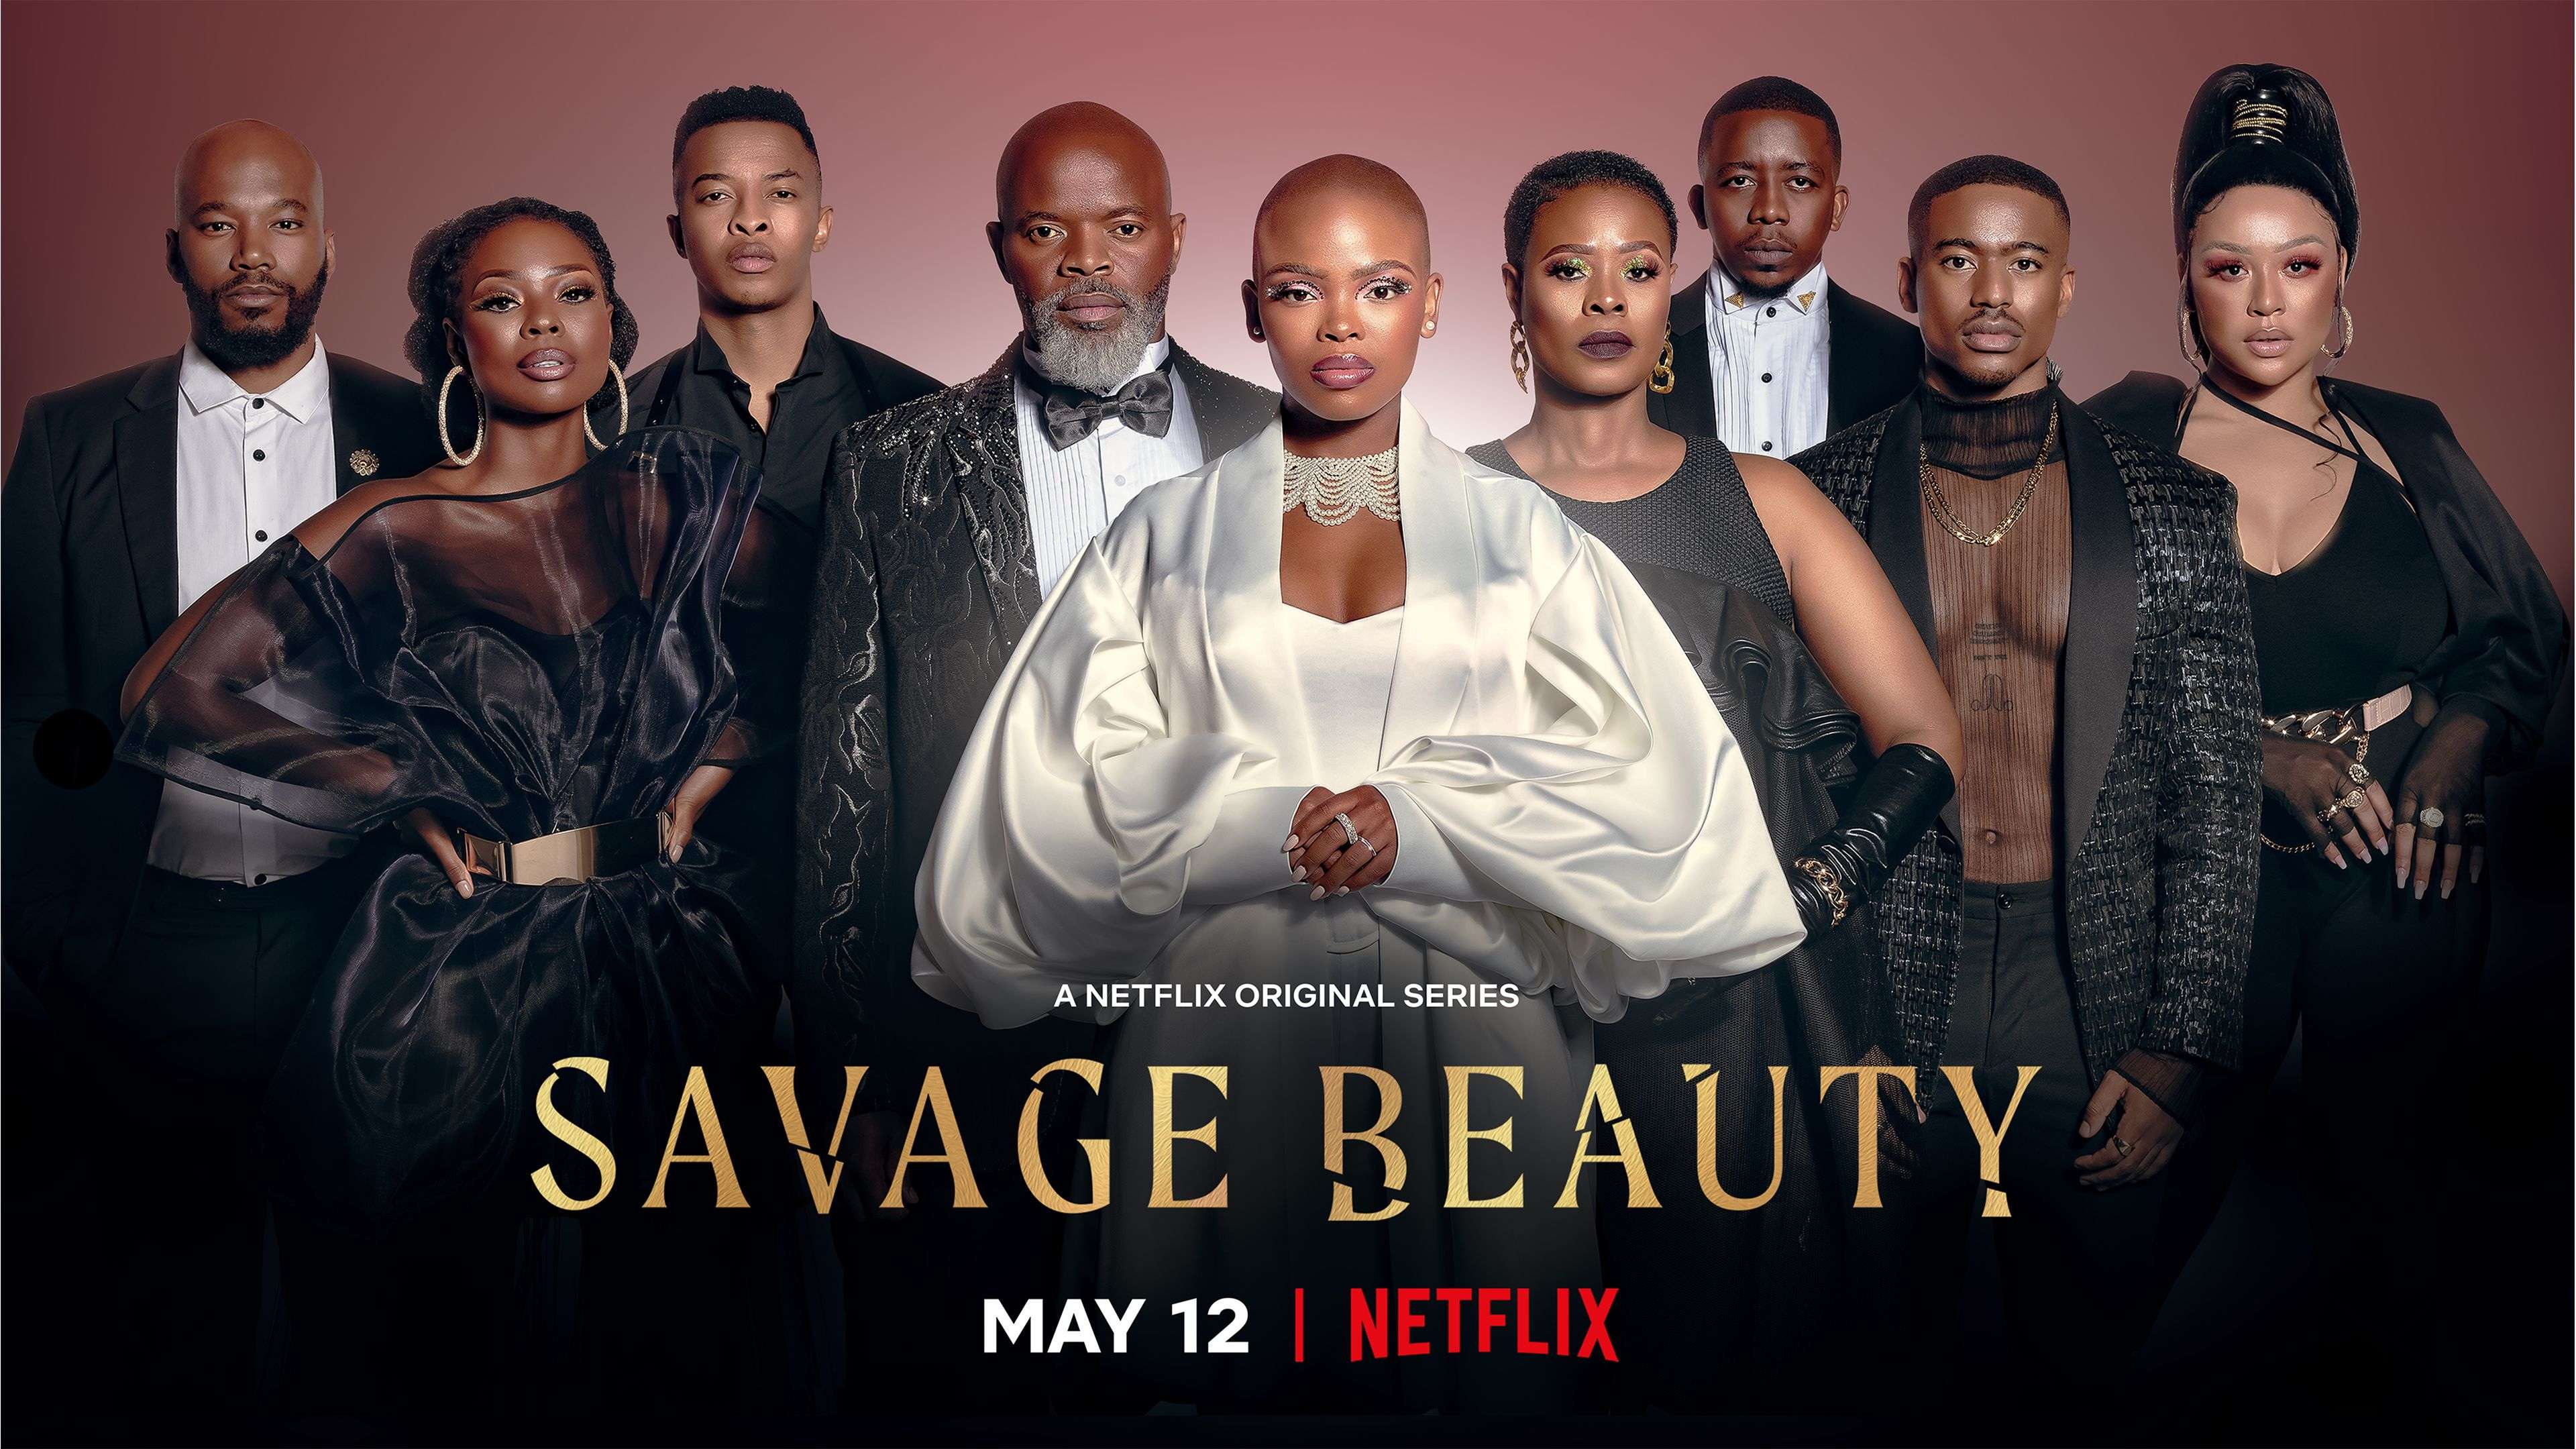 ‘Savage Beauty’, RevengeFueled South African Drama, on Netflix Next TV